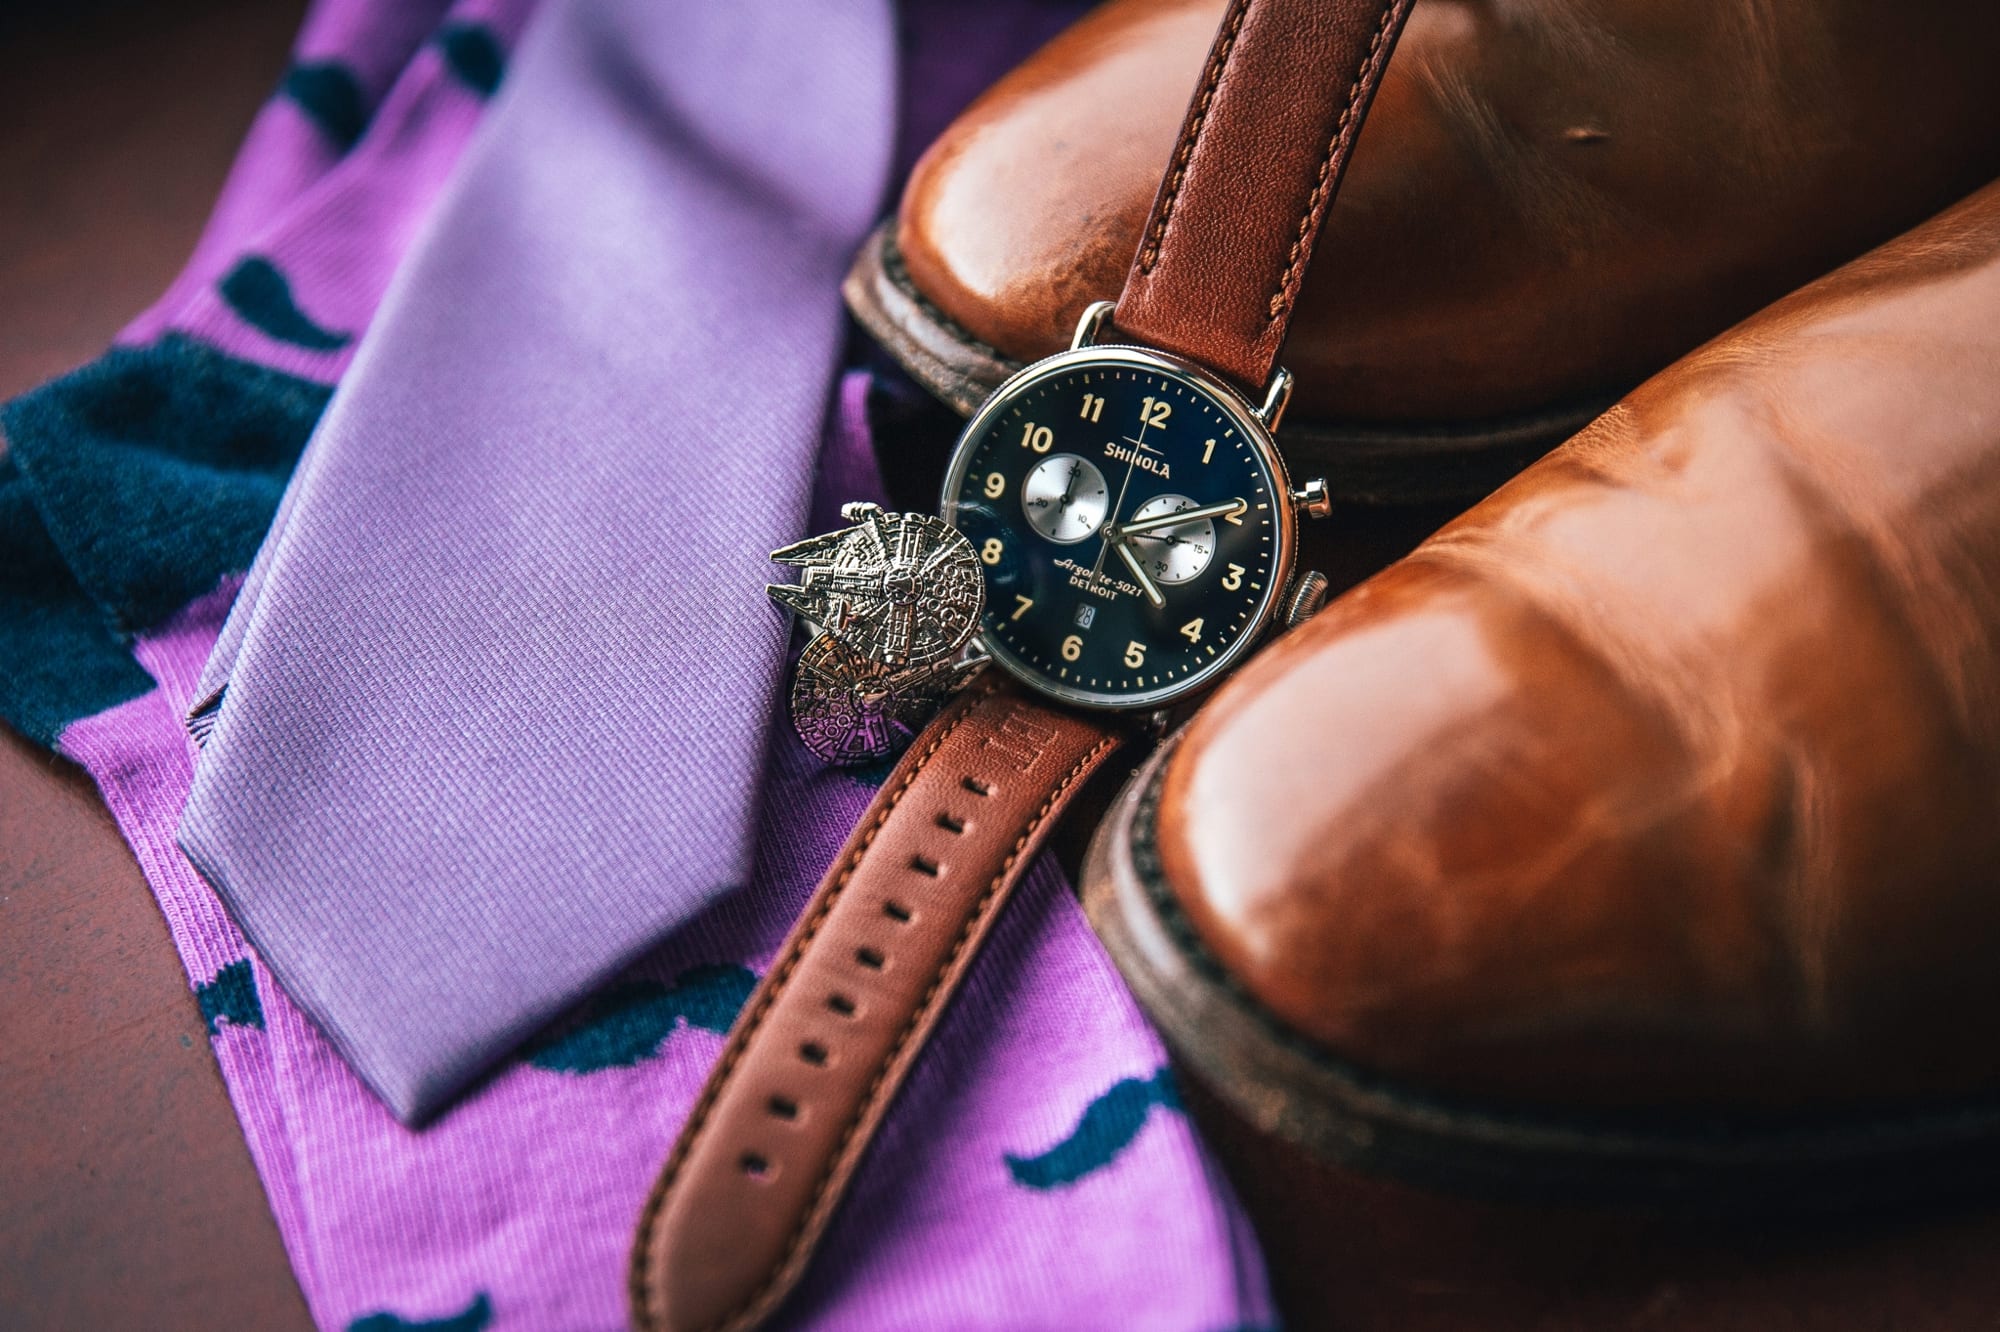 A photo of the groom's Shinola watch and Star Wars cufflinks